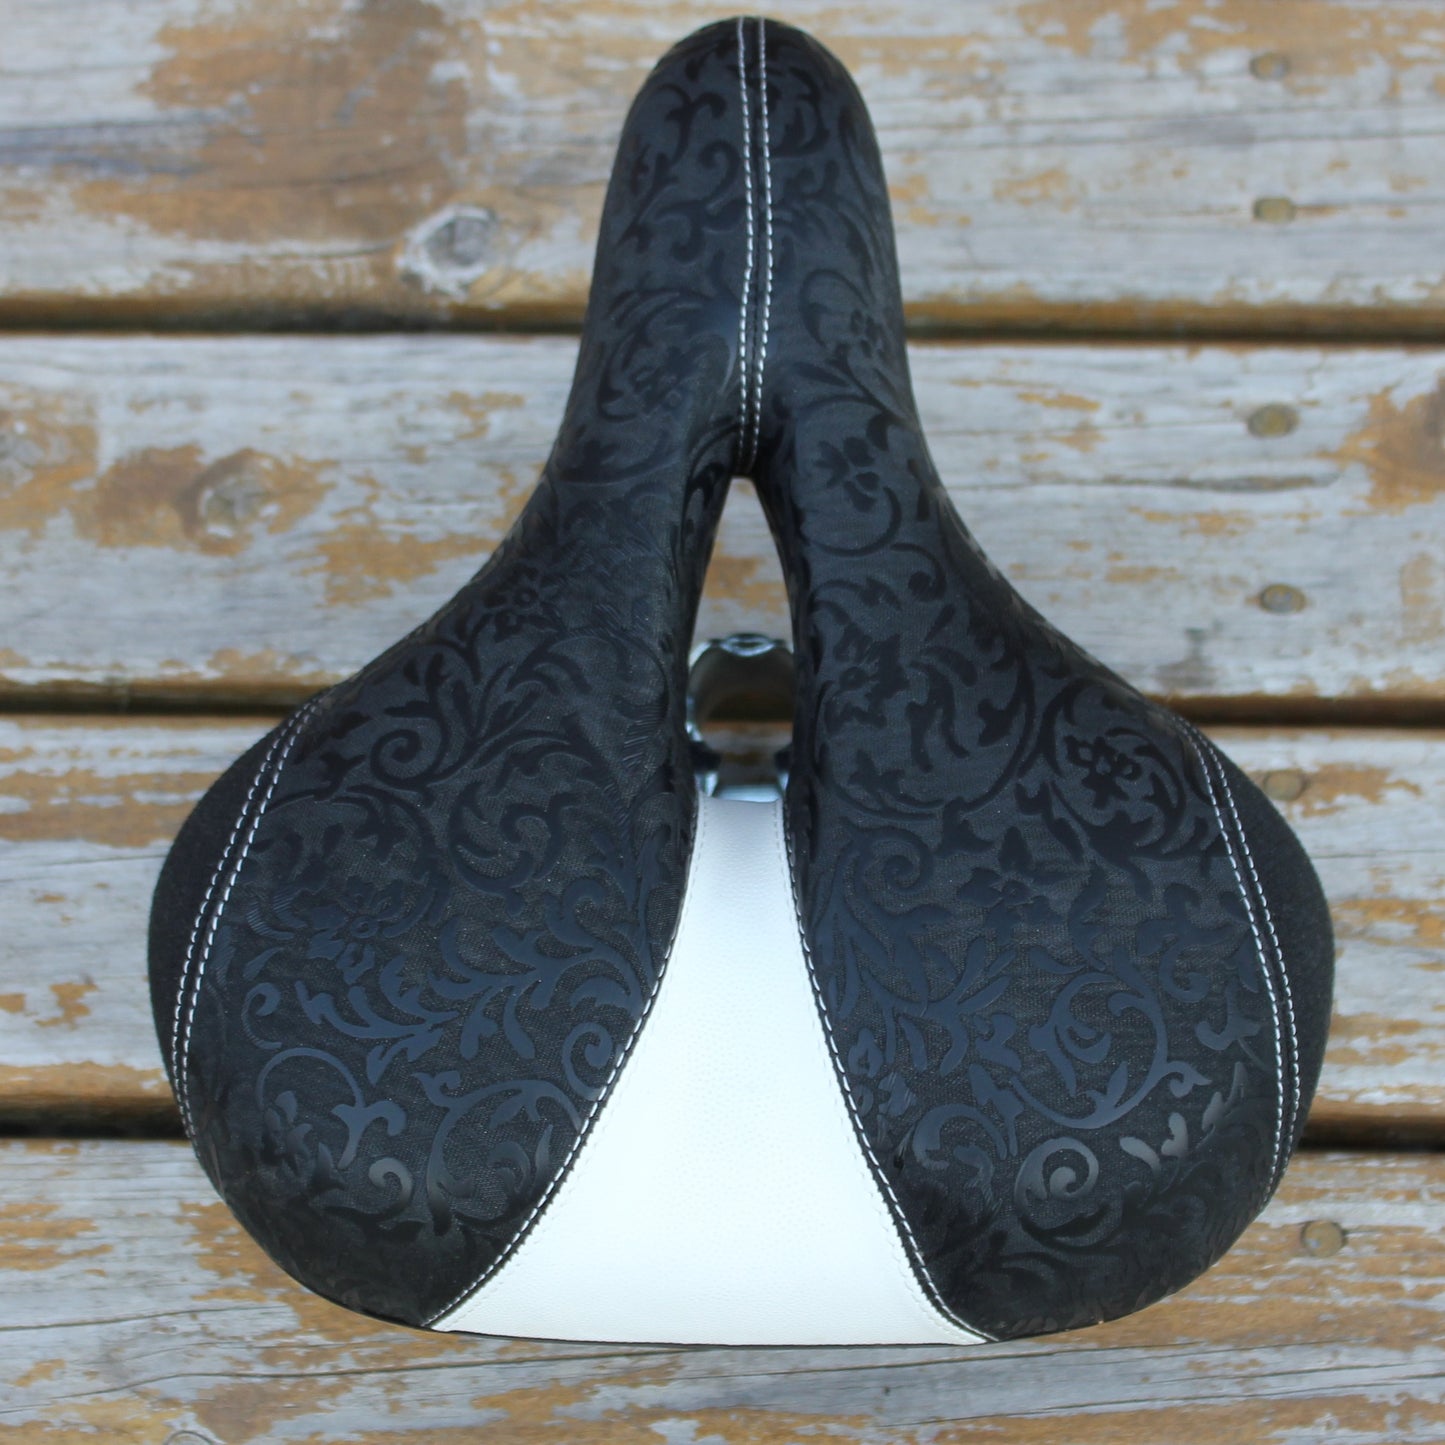 Cionlli Elegance comfort saddle in black/white